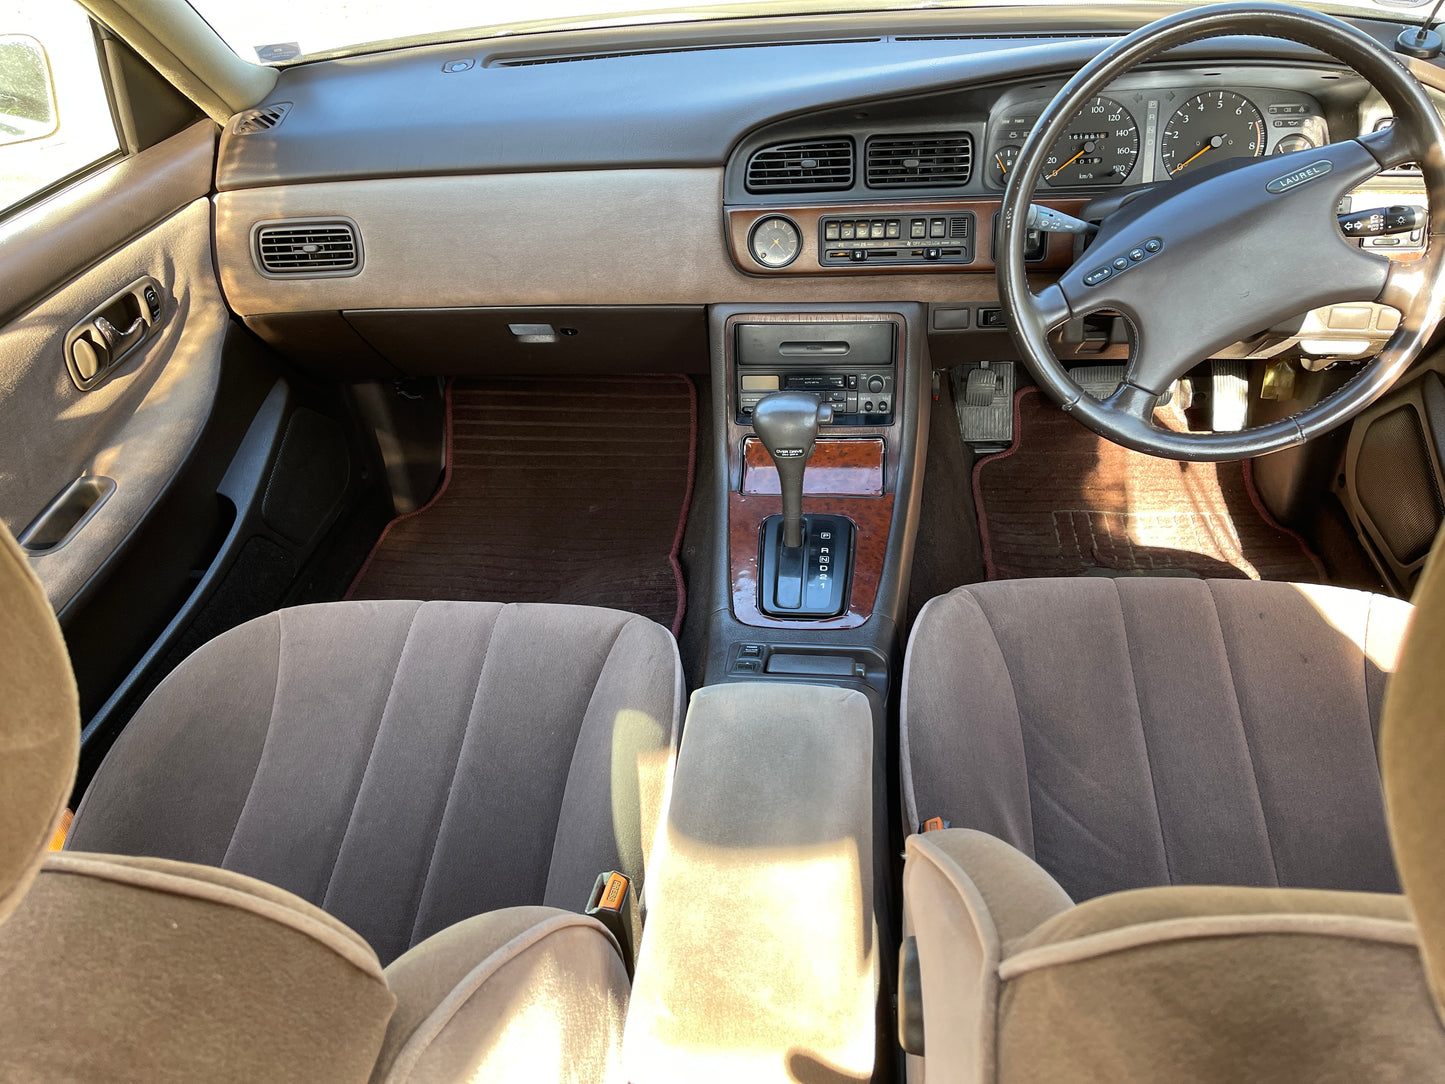 Nissan Laurel C33 Turbo - 1993